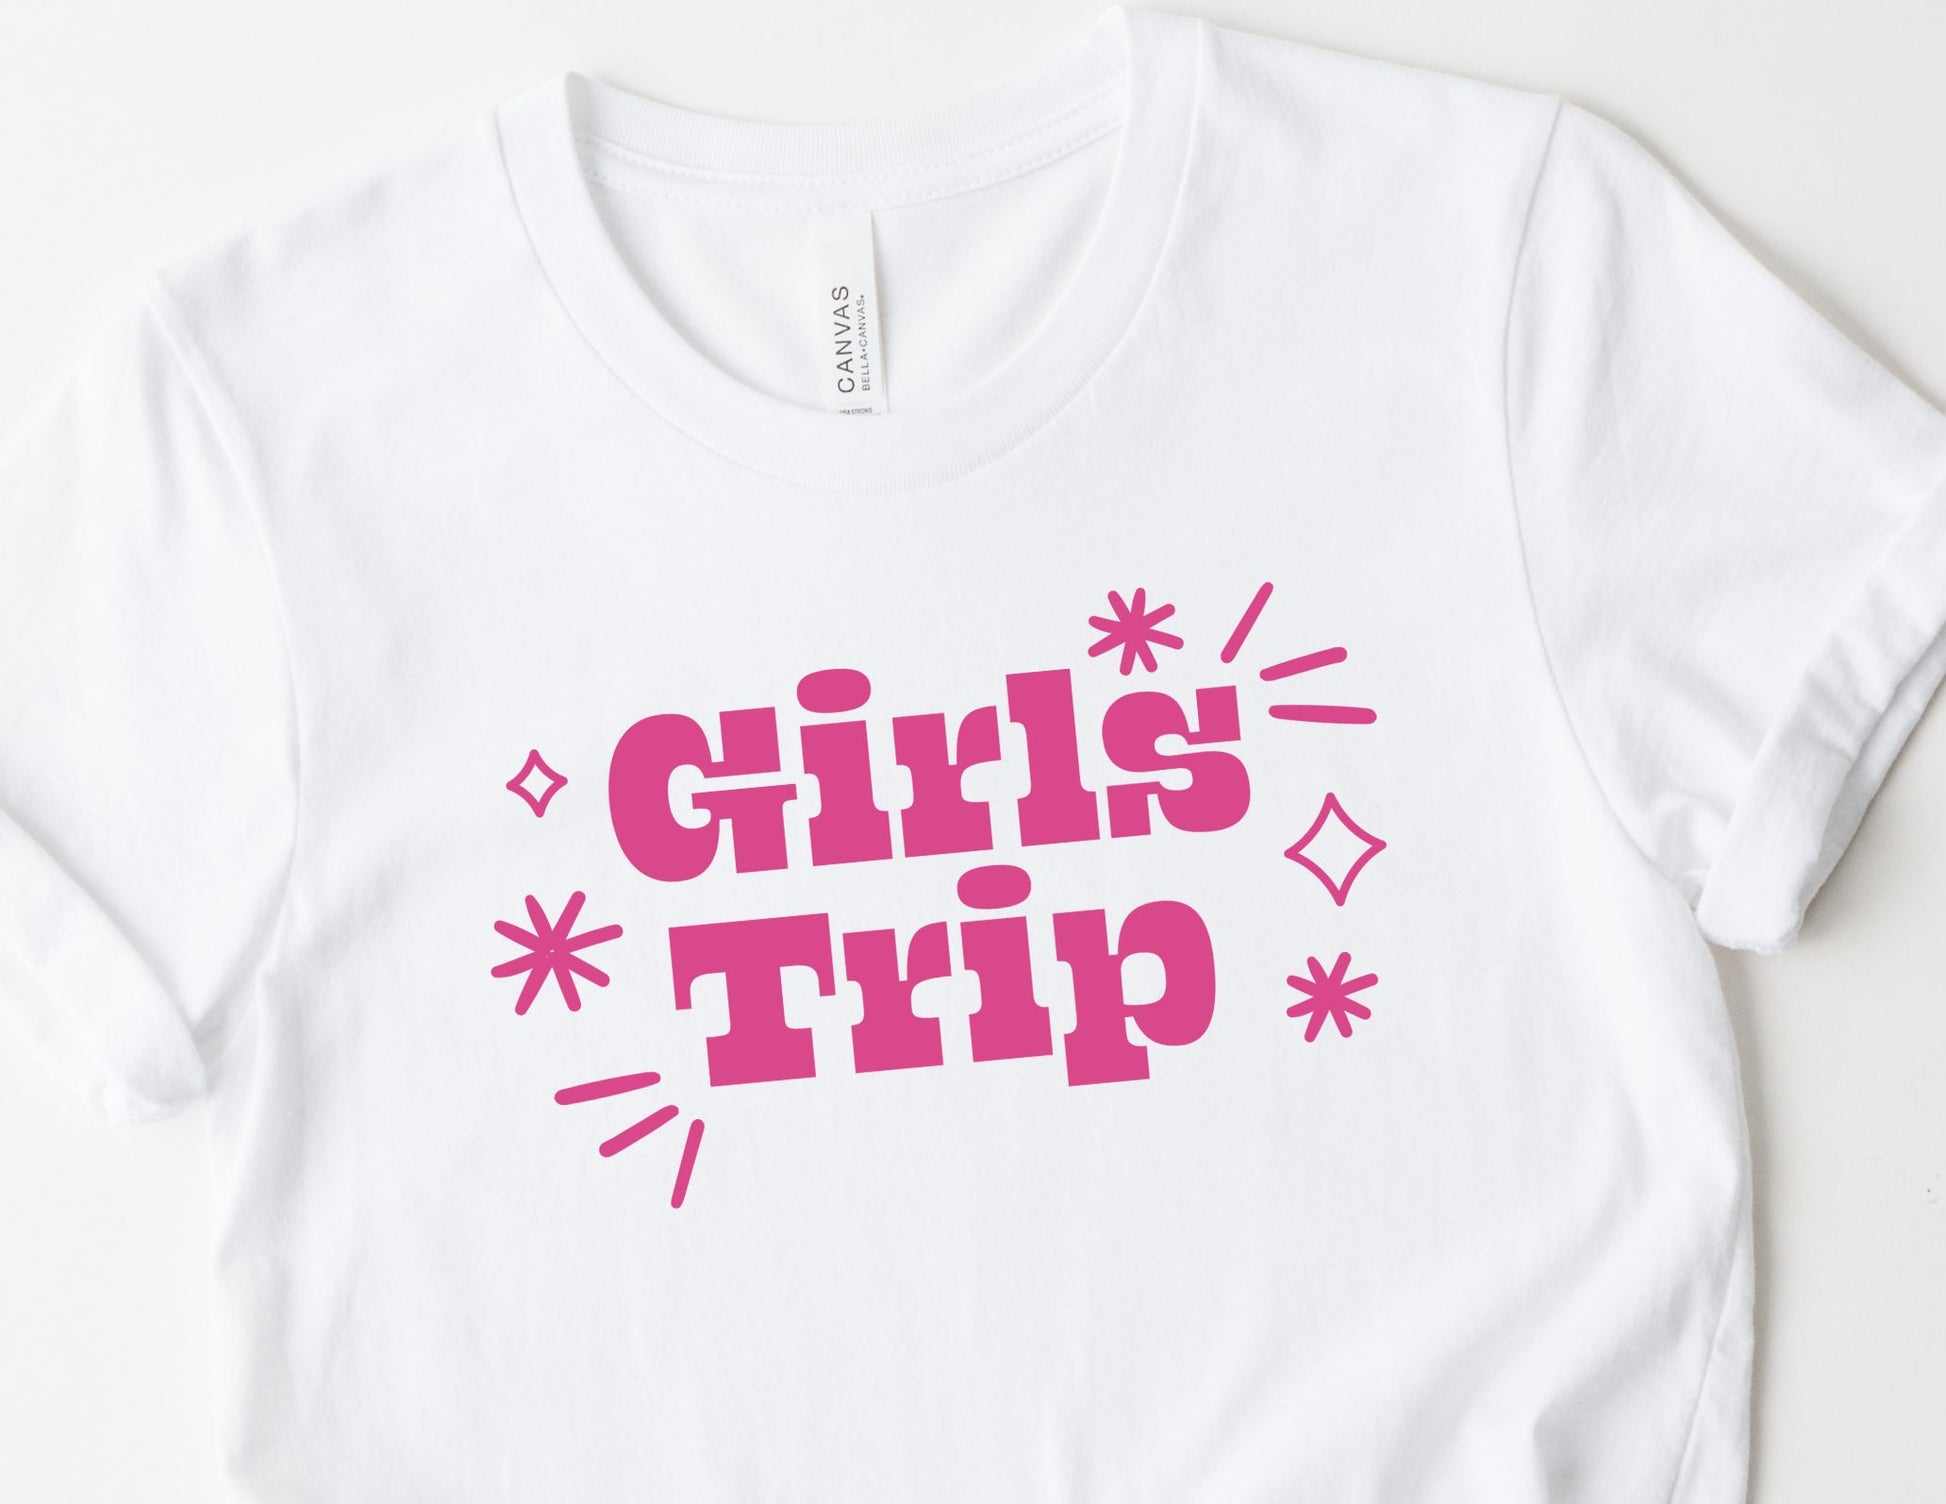 Sunshine Girls Trip Shirt